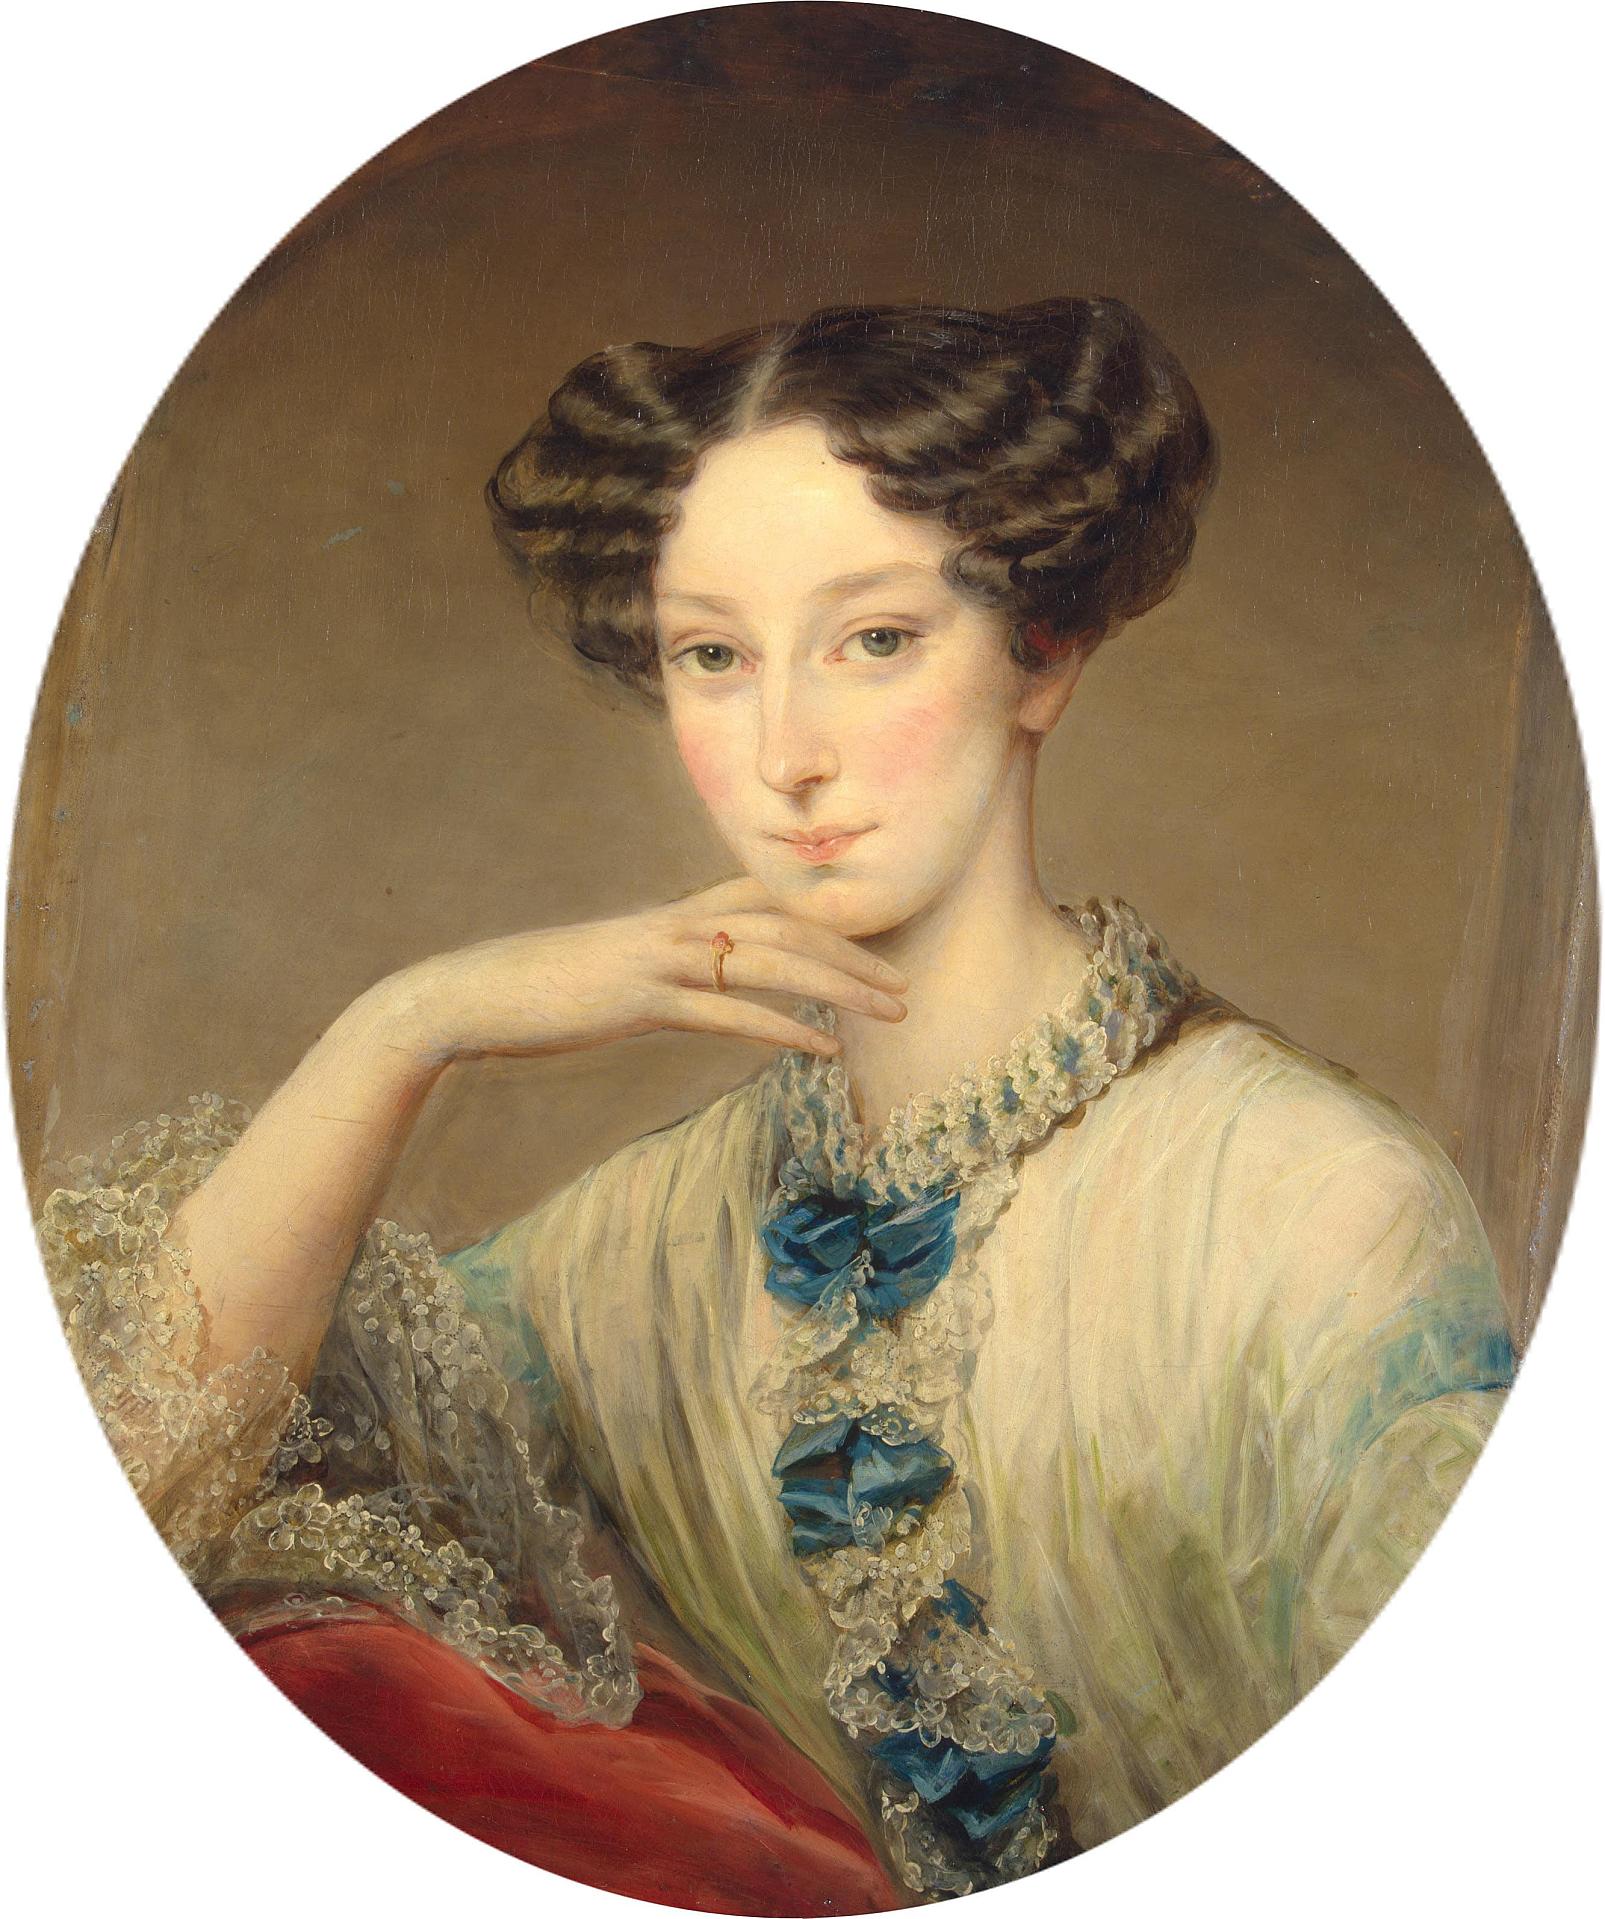 Кристина Робертсон. "Портрет великой княгини Марии Александровны". около 1850. Эрмитаж, Санкт-Петербург.